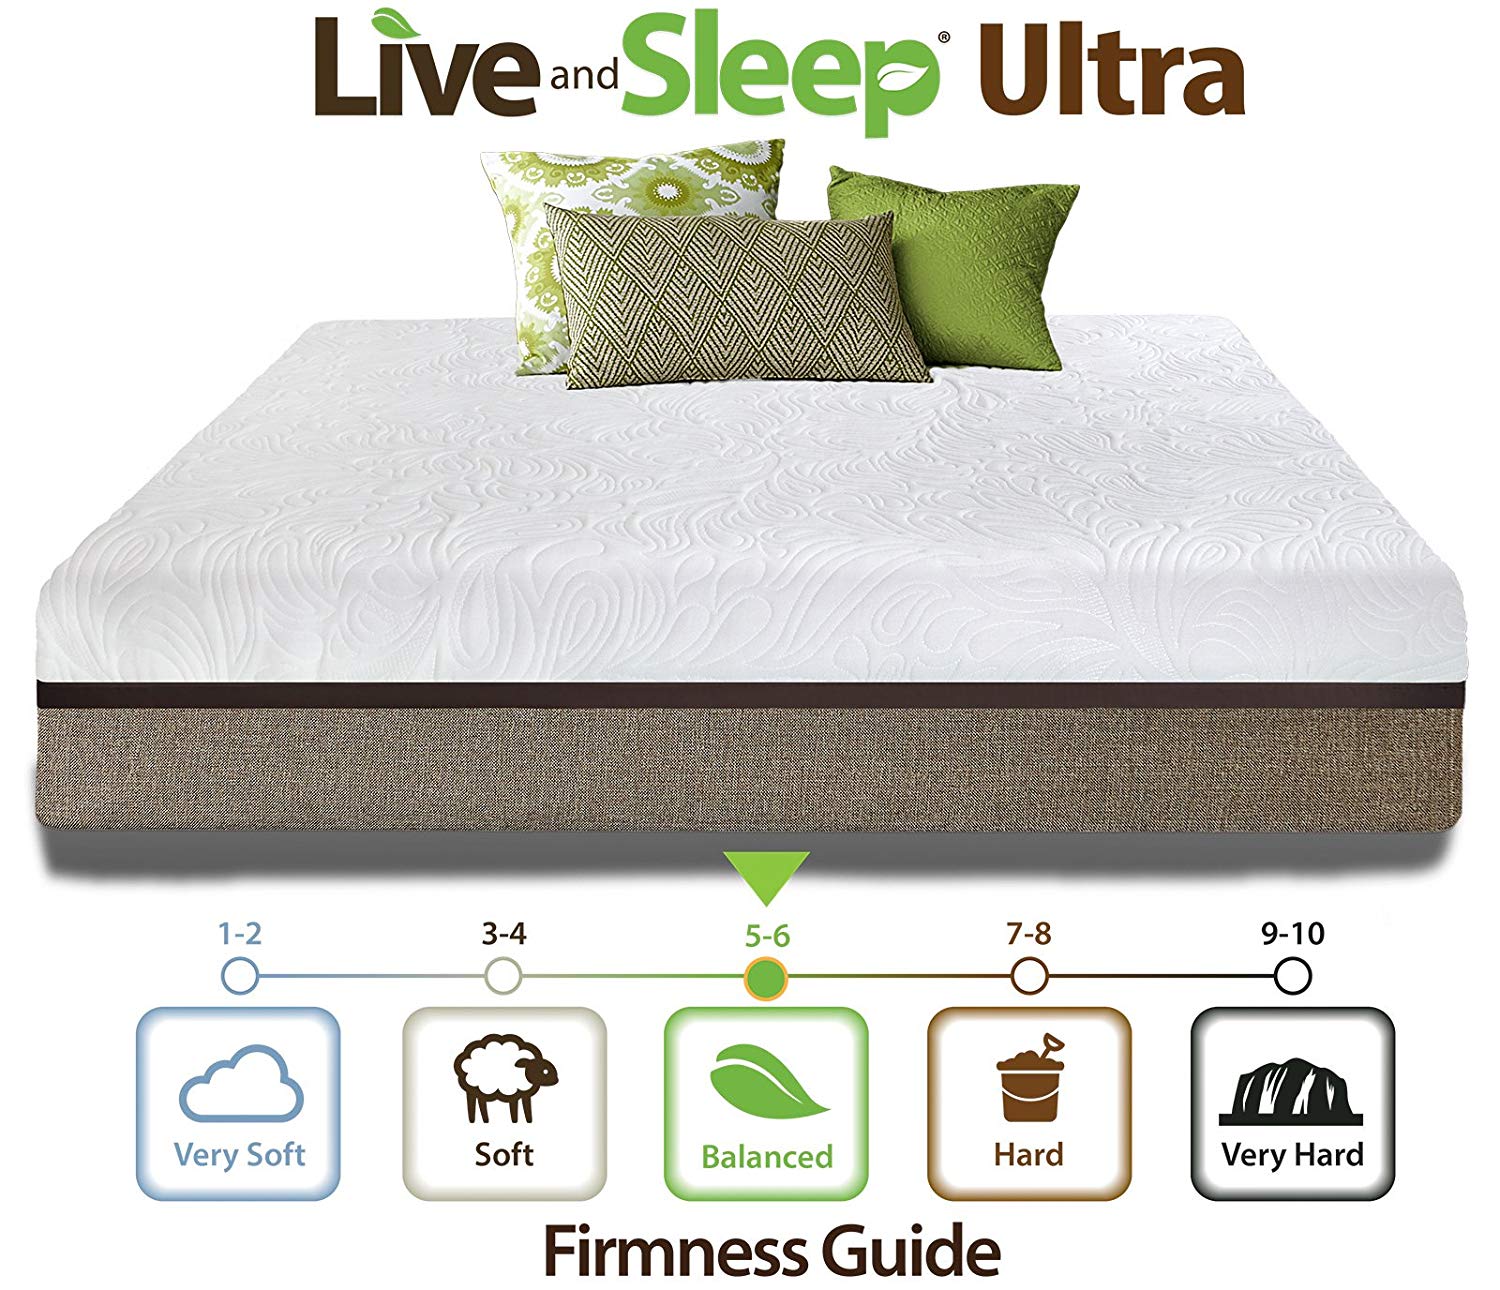 Firmness and support Live and Sleep Resort Ultra Memory Foam Mattress